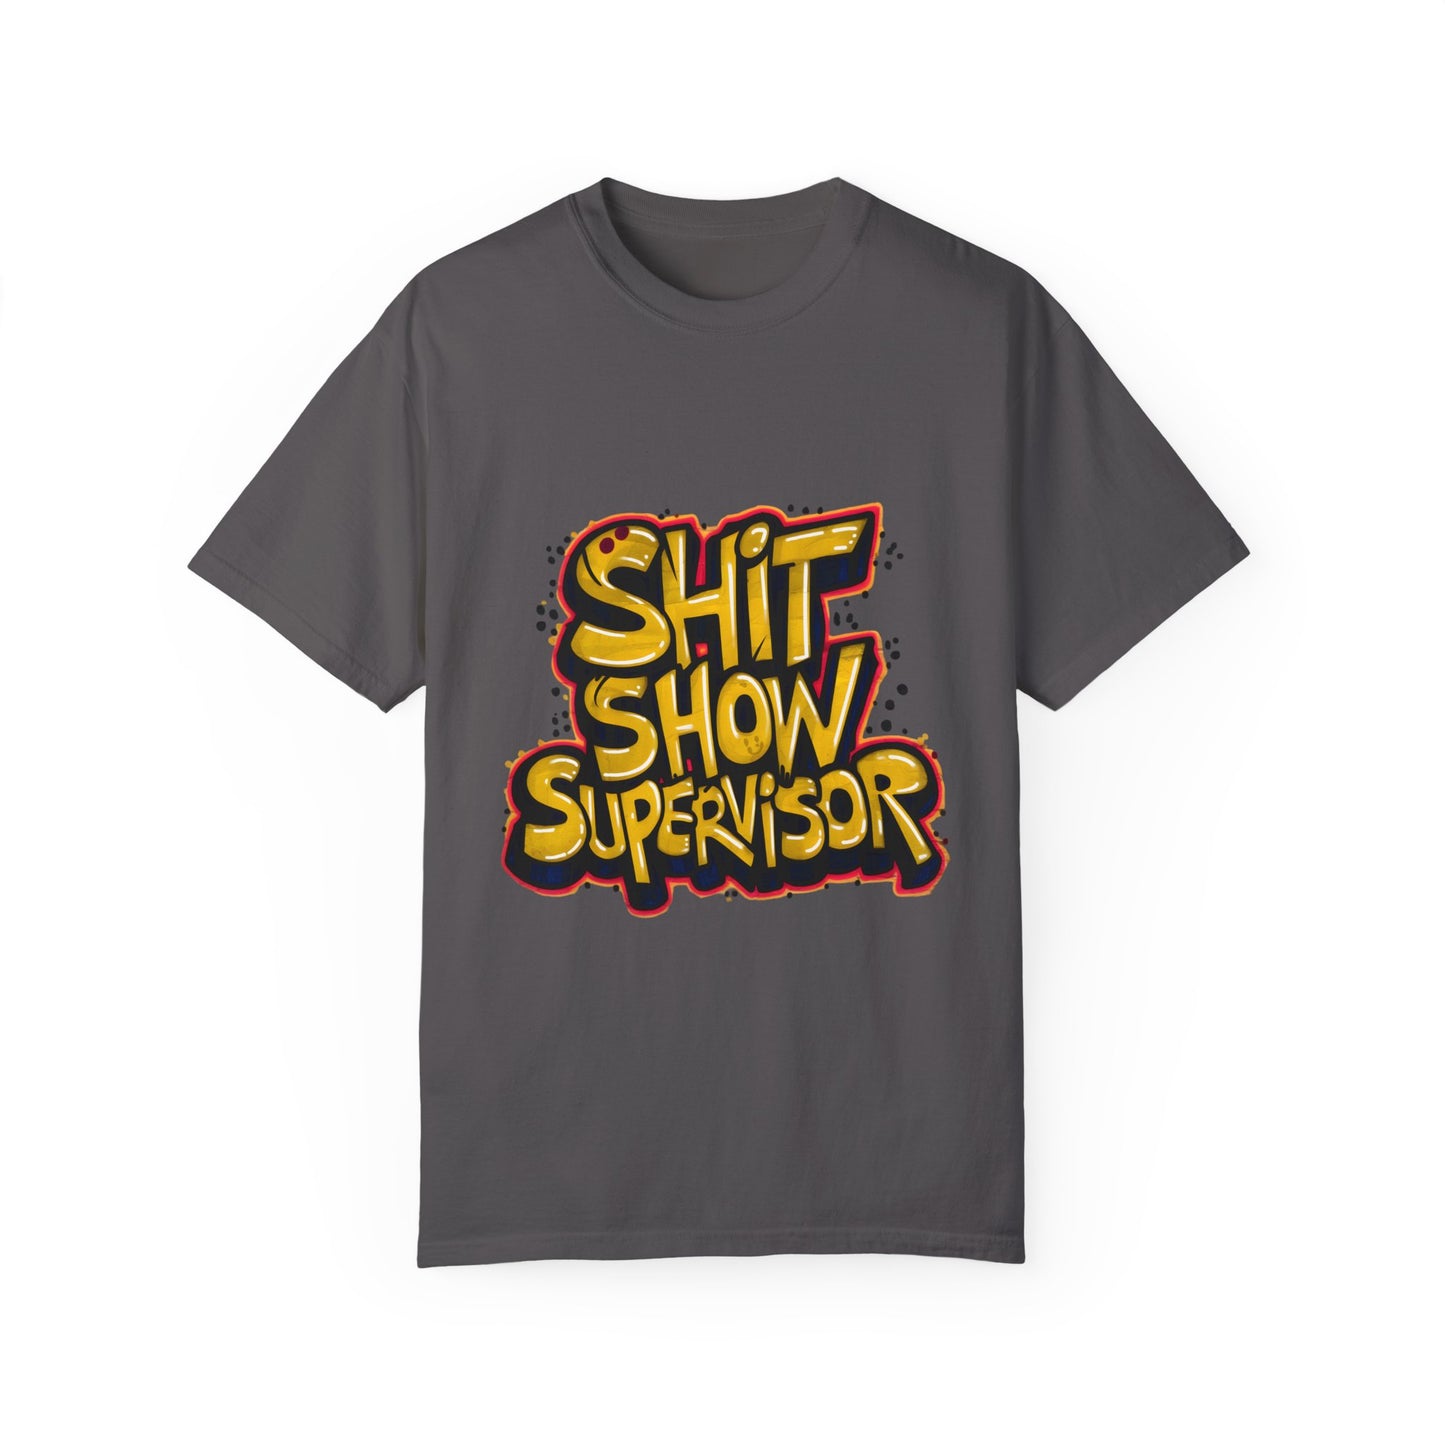 Shit Show Supervisor Urban Sarcastic Graphic Unisex Garment Dyed T-shirt Cotton Funny Humorous Graphic Soft Premium Unisex Men Women Graphite T-shirt Birthday Gift-8